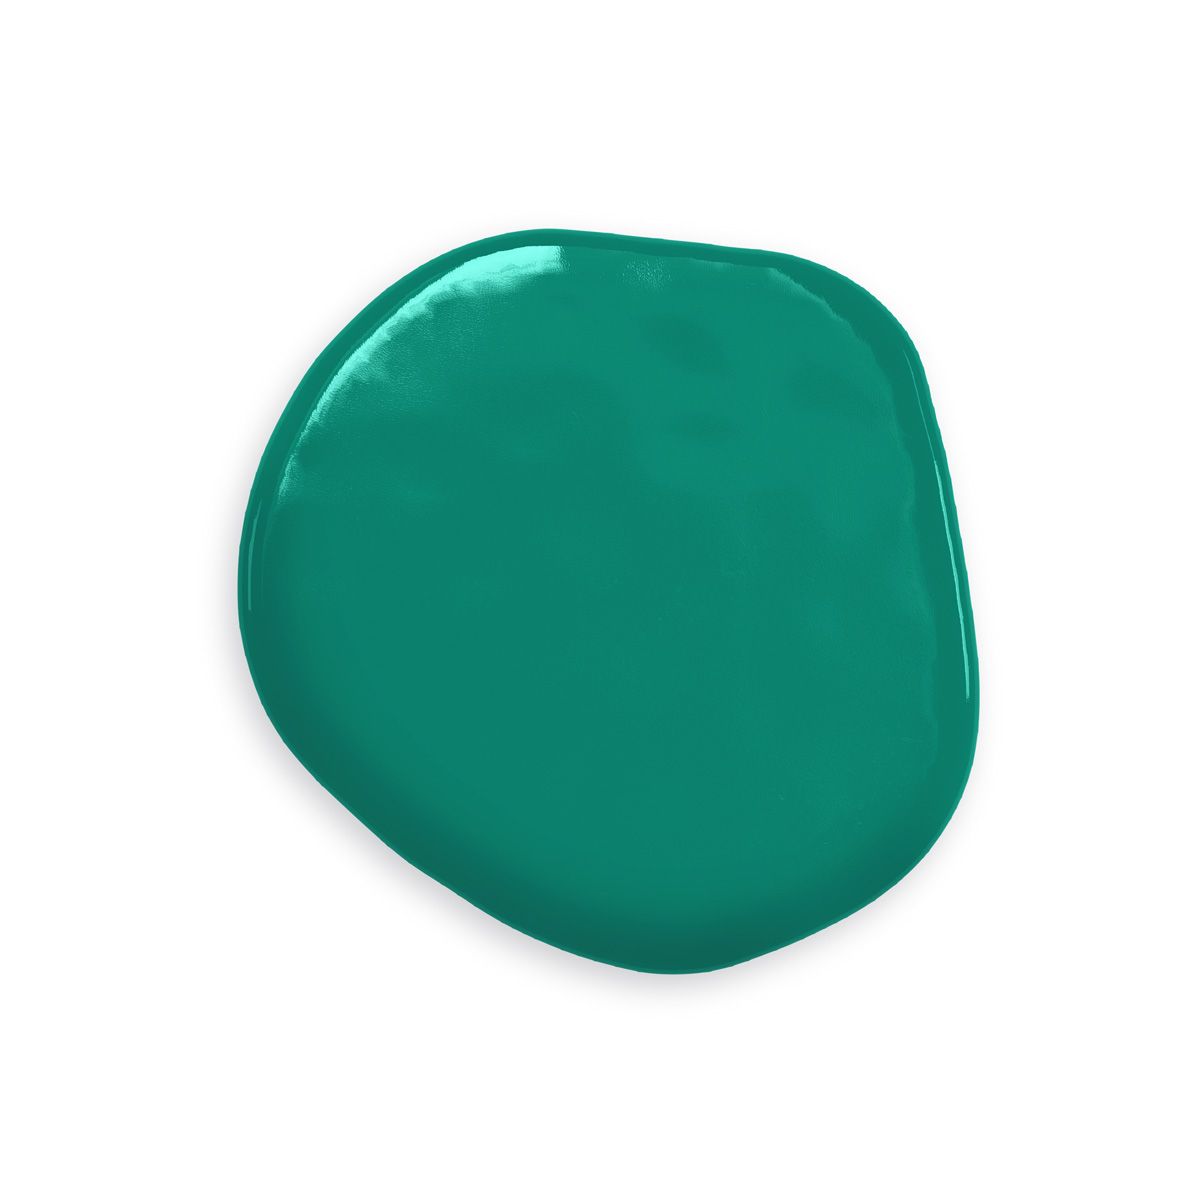 Colour Mill - ölbasierte Lebensmittelfarbe - Emerald - Grün - 20ml